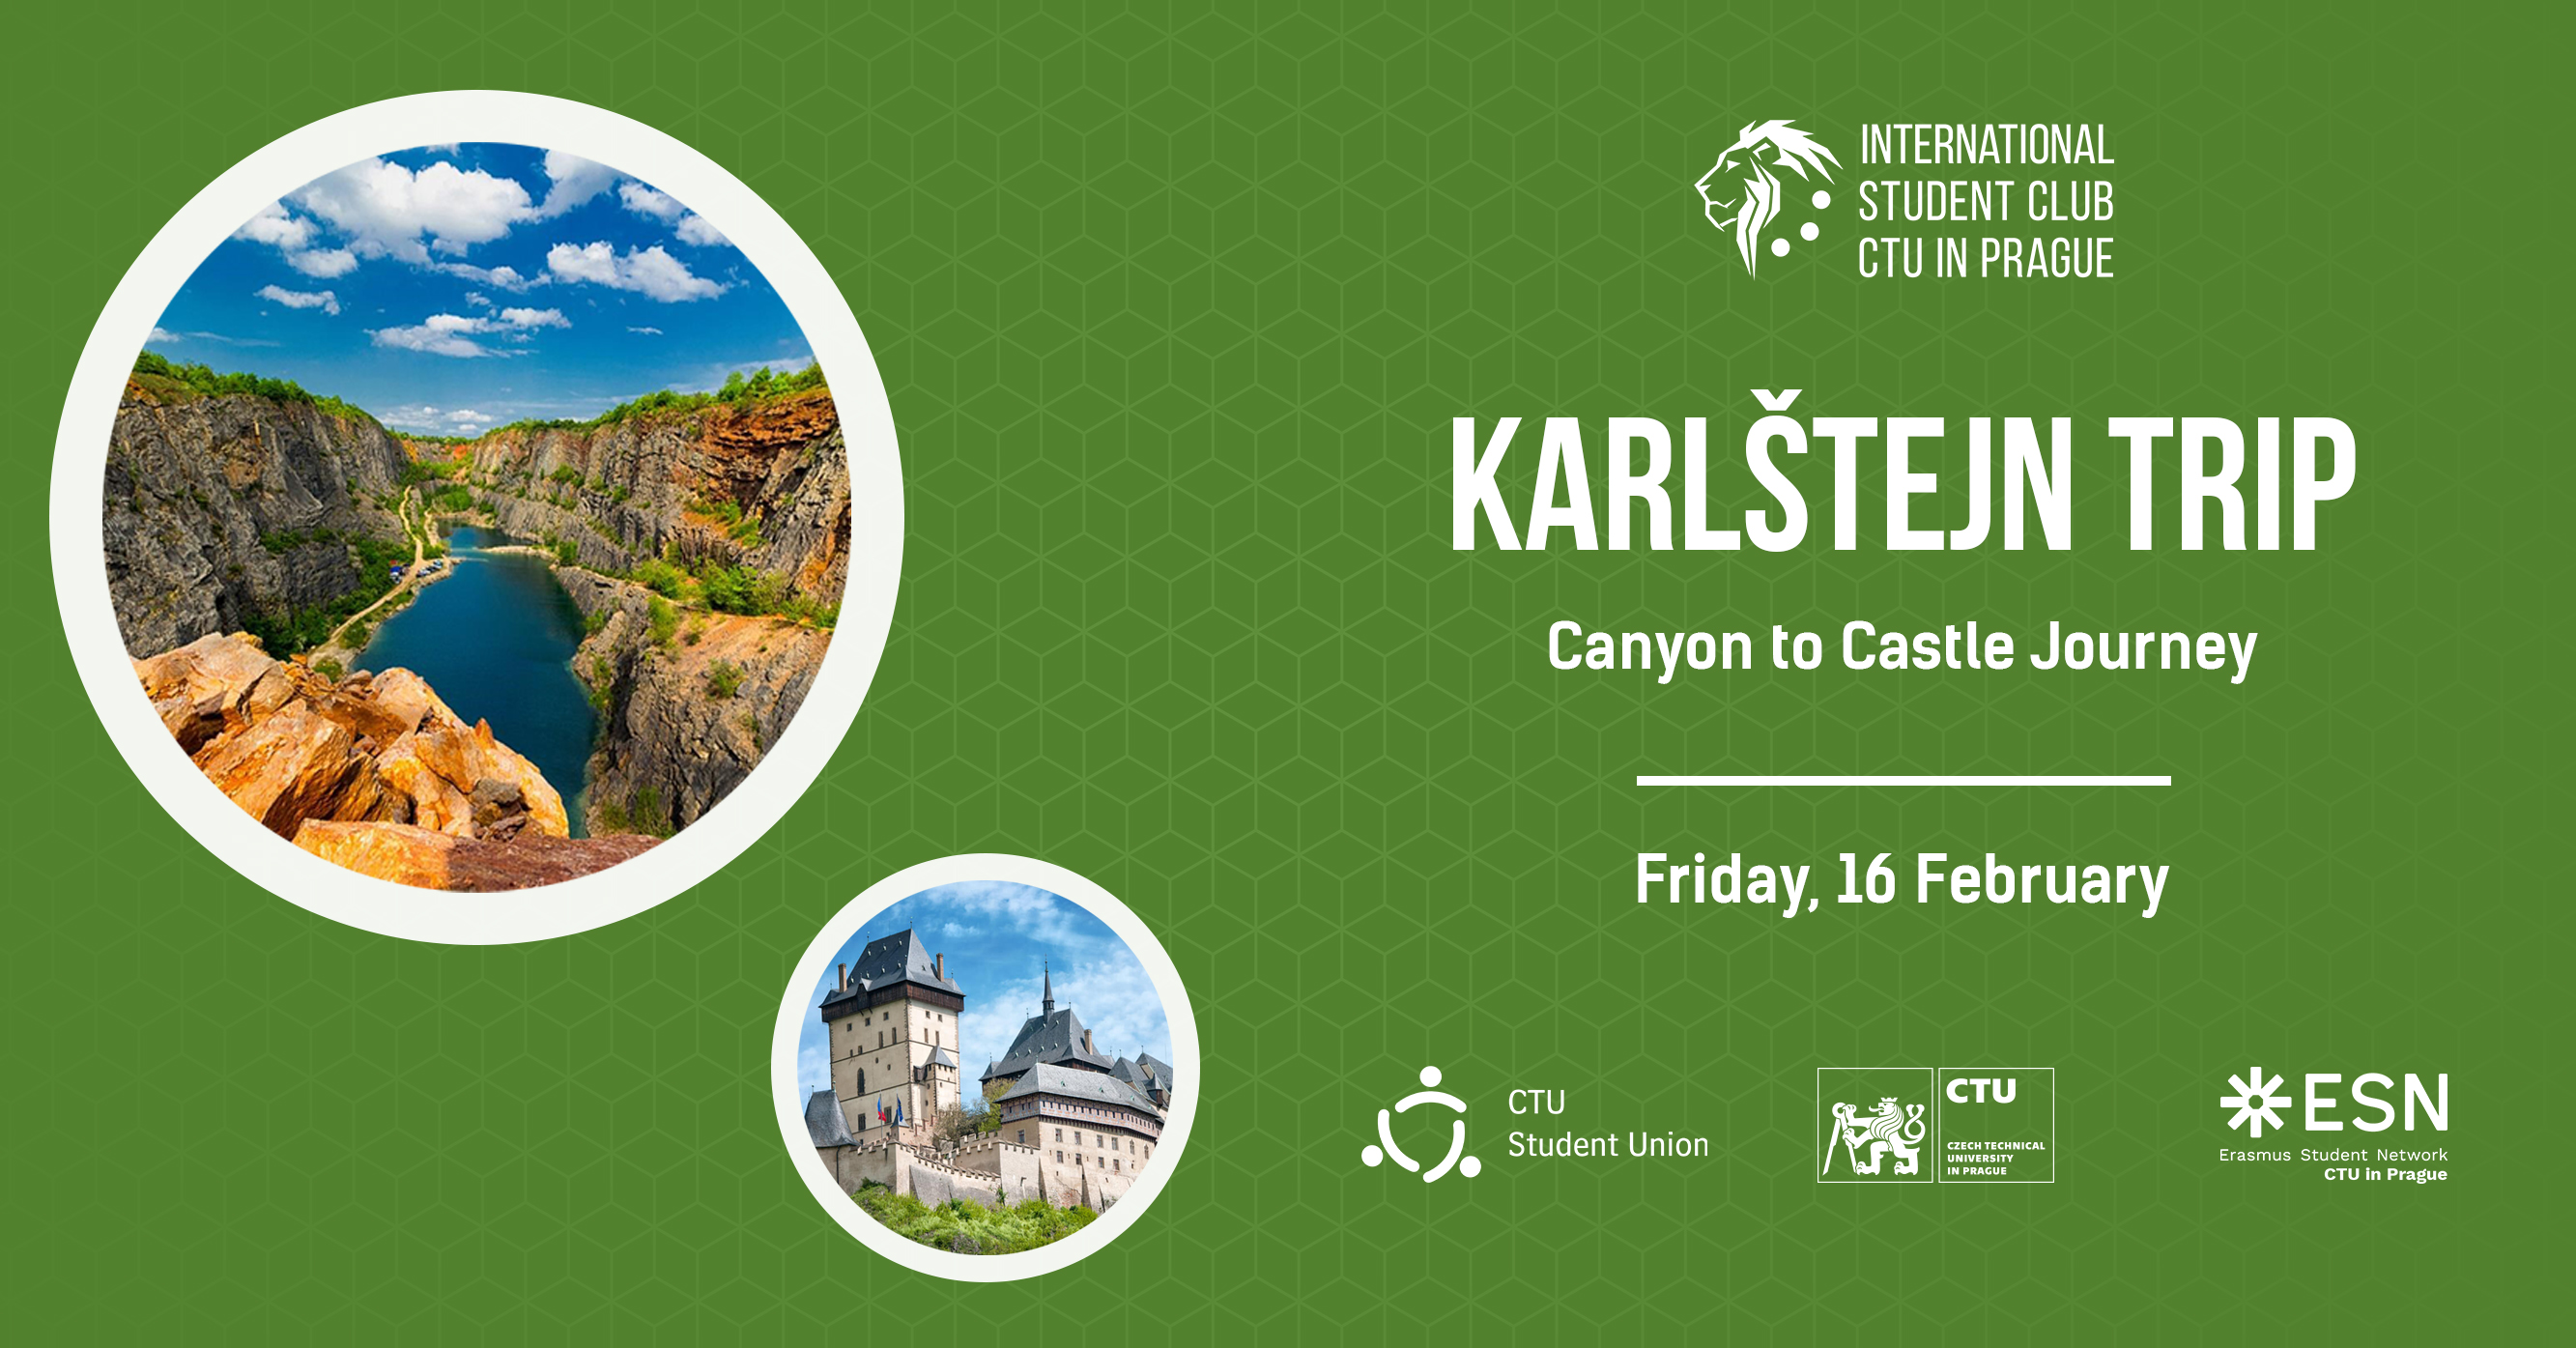 Canyon to Castle Journey: the Czech “Grand Canyon” and Karlštejn Castle